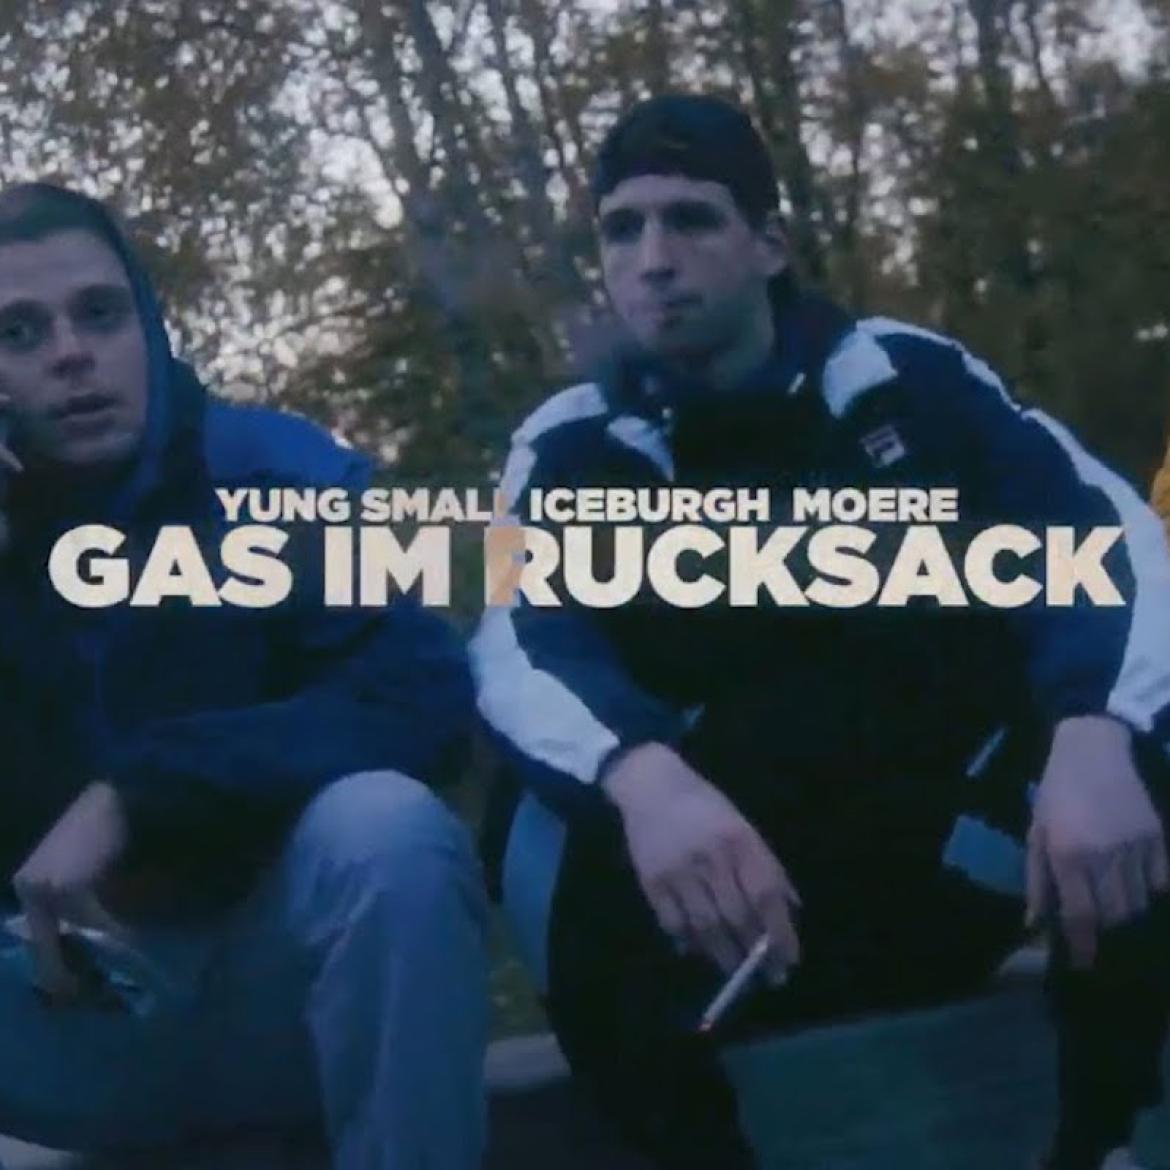 Yung Smali x IceBurgh - Gas im Rucksack feat. Moere